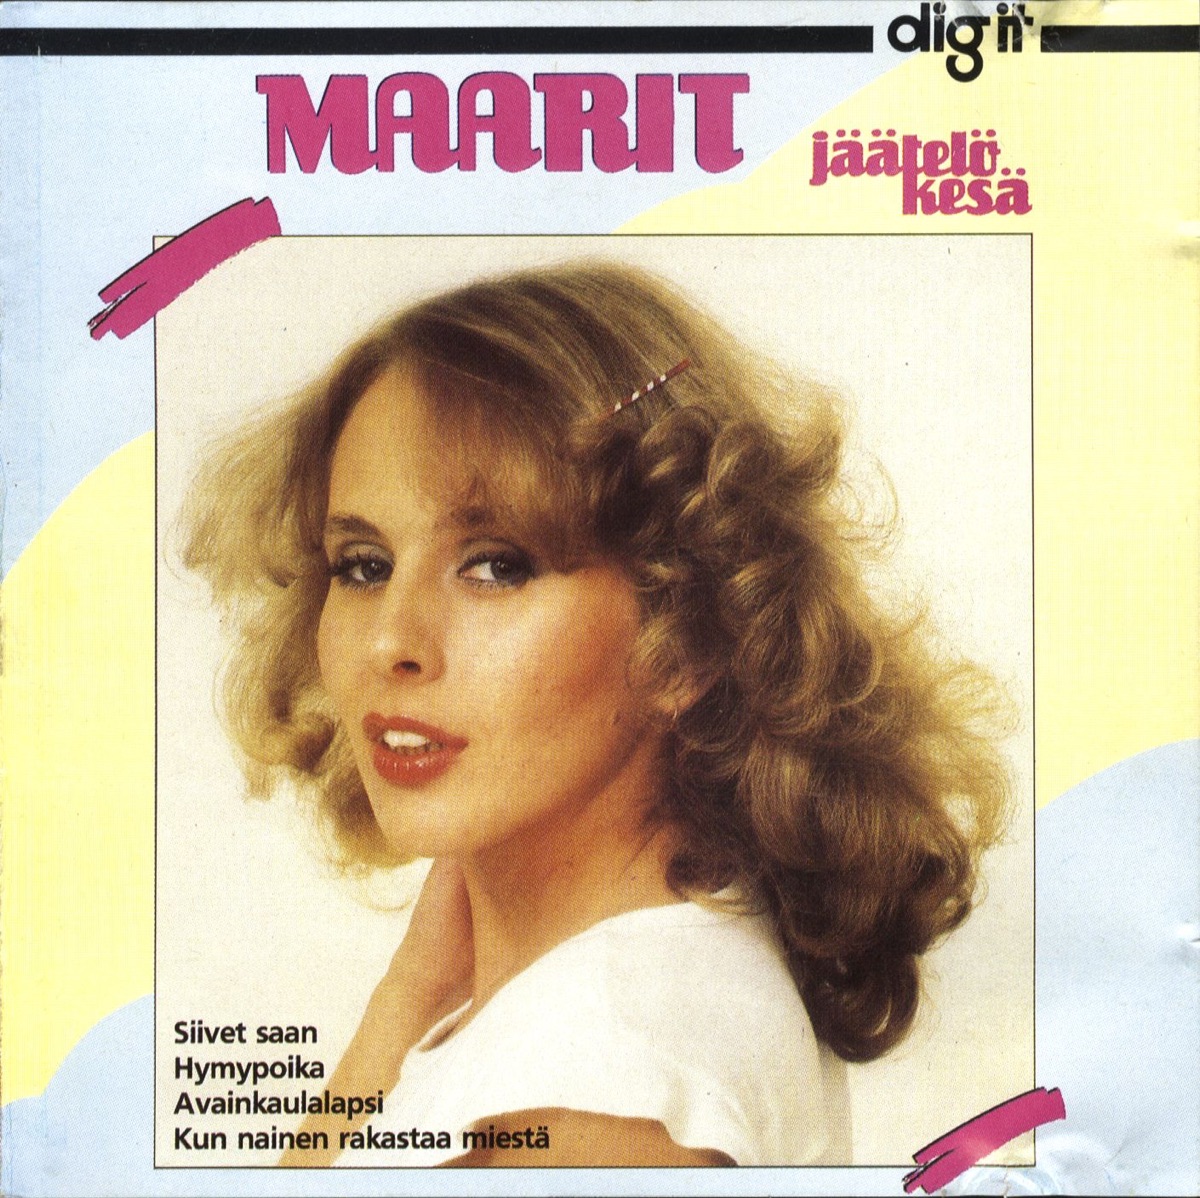 Kaarina - Single - Album by Maarit - Apple Music